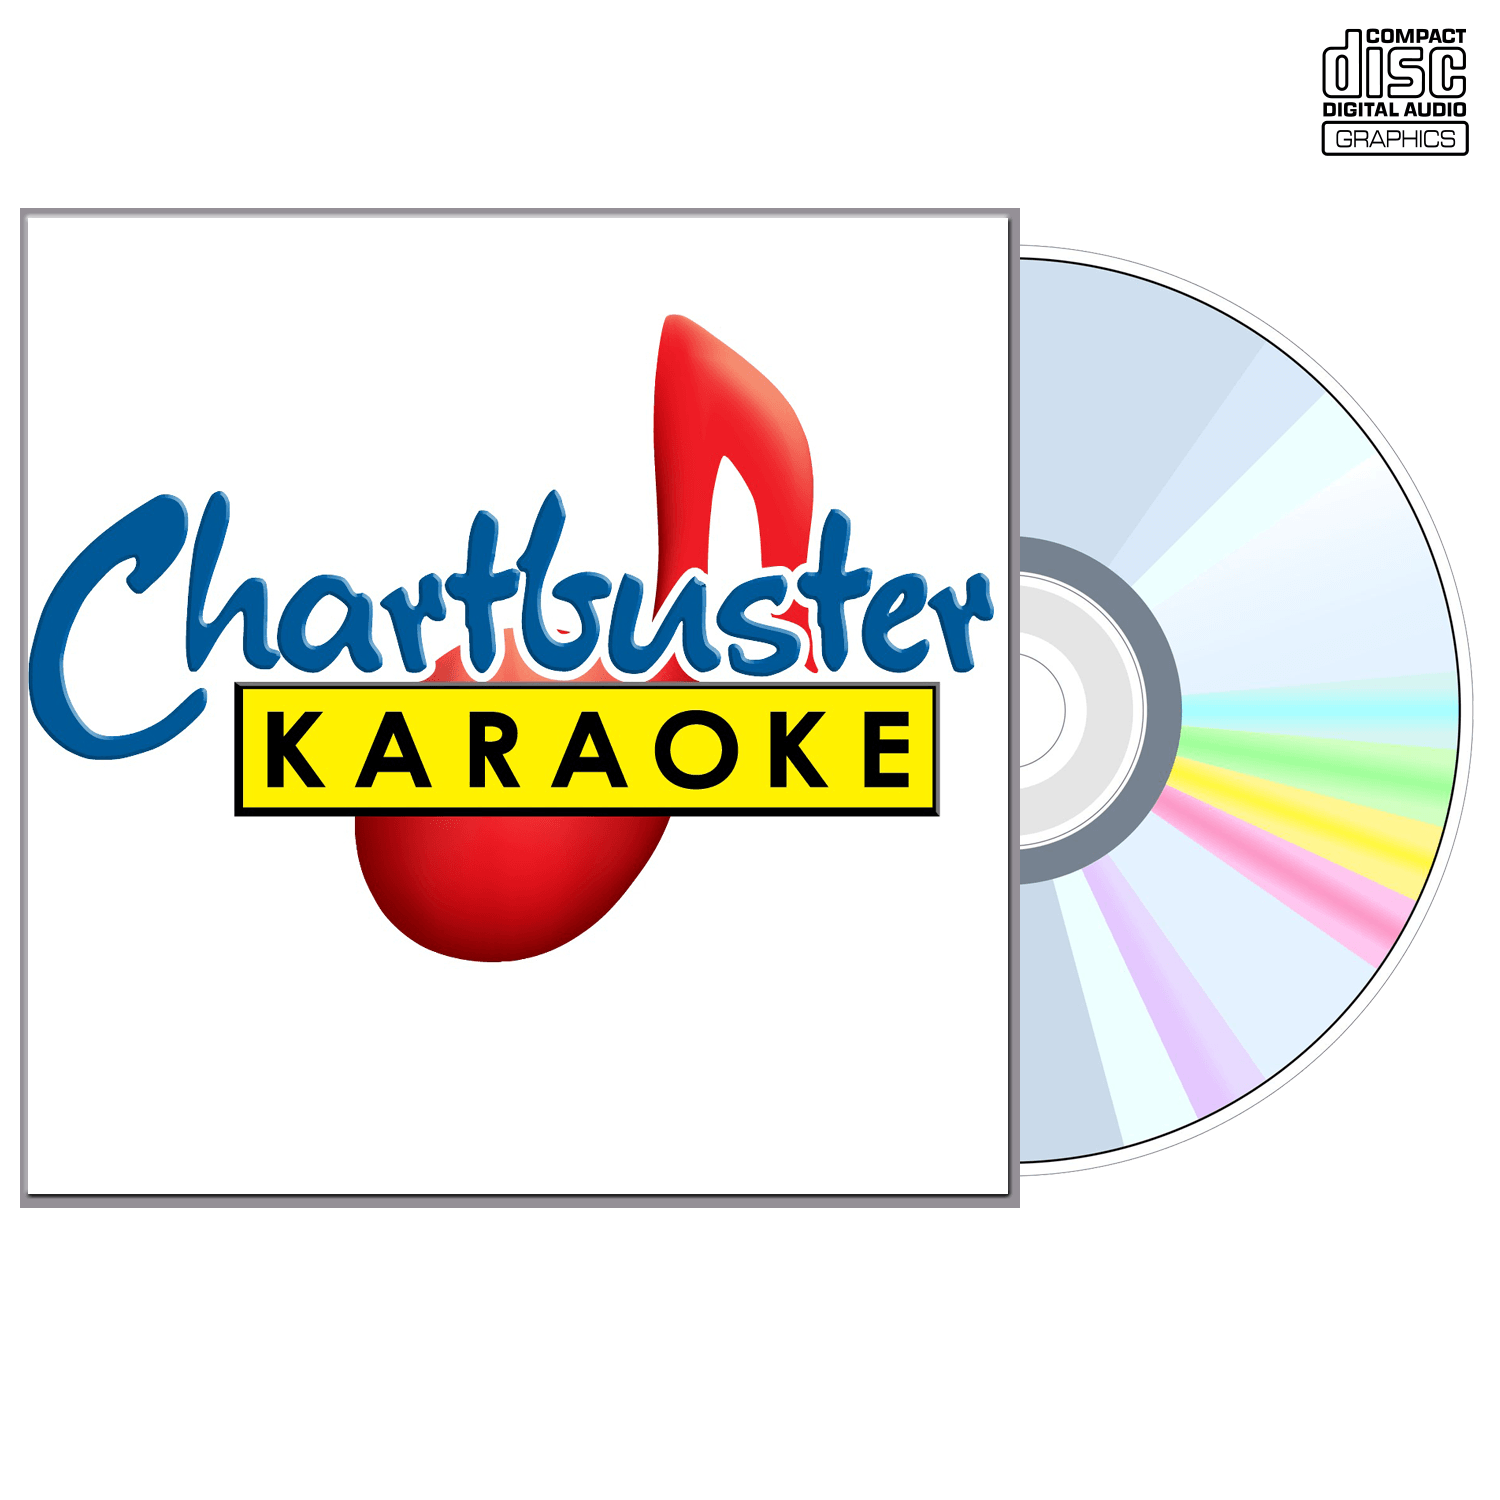 Eddy Arnold Vol 2 - CD+G - Chartbuster Karaoke - Karaoke Home Entertainment